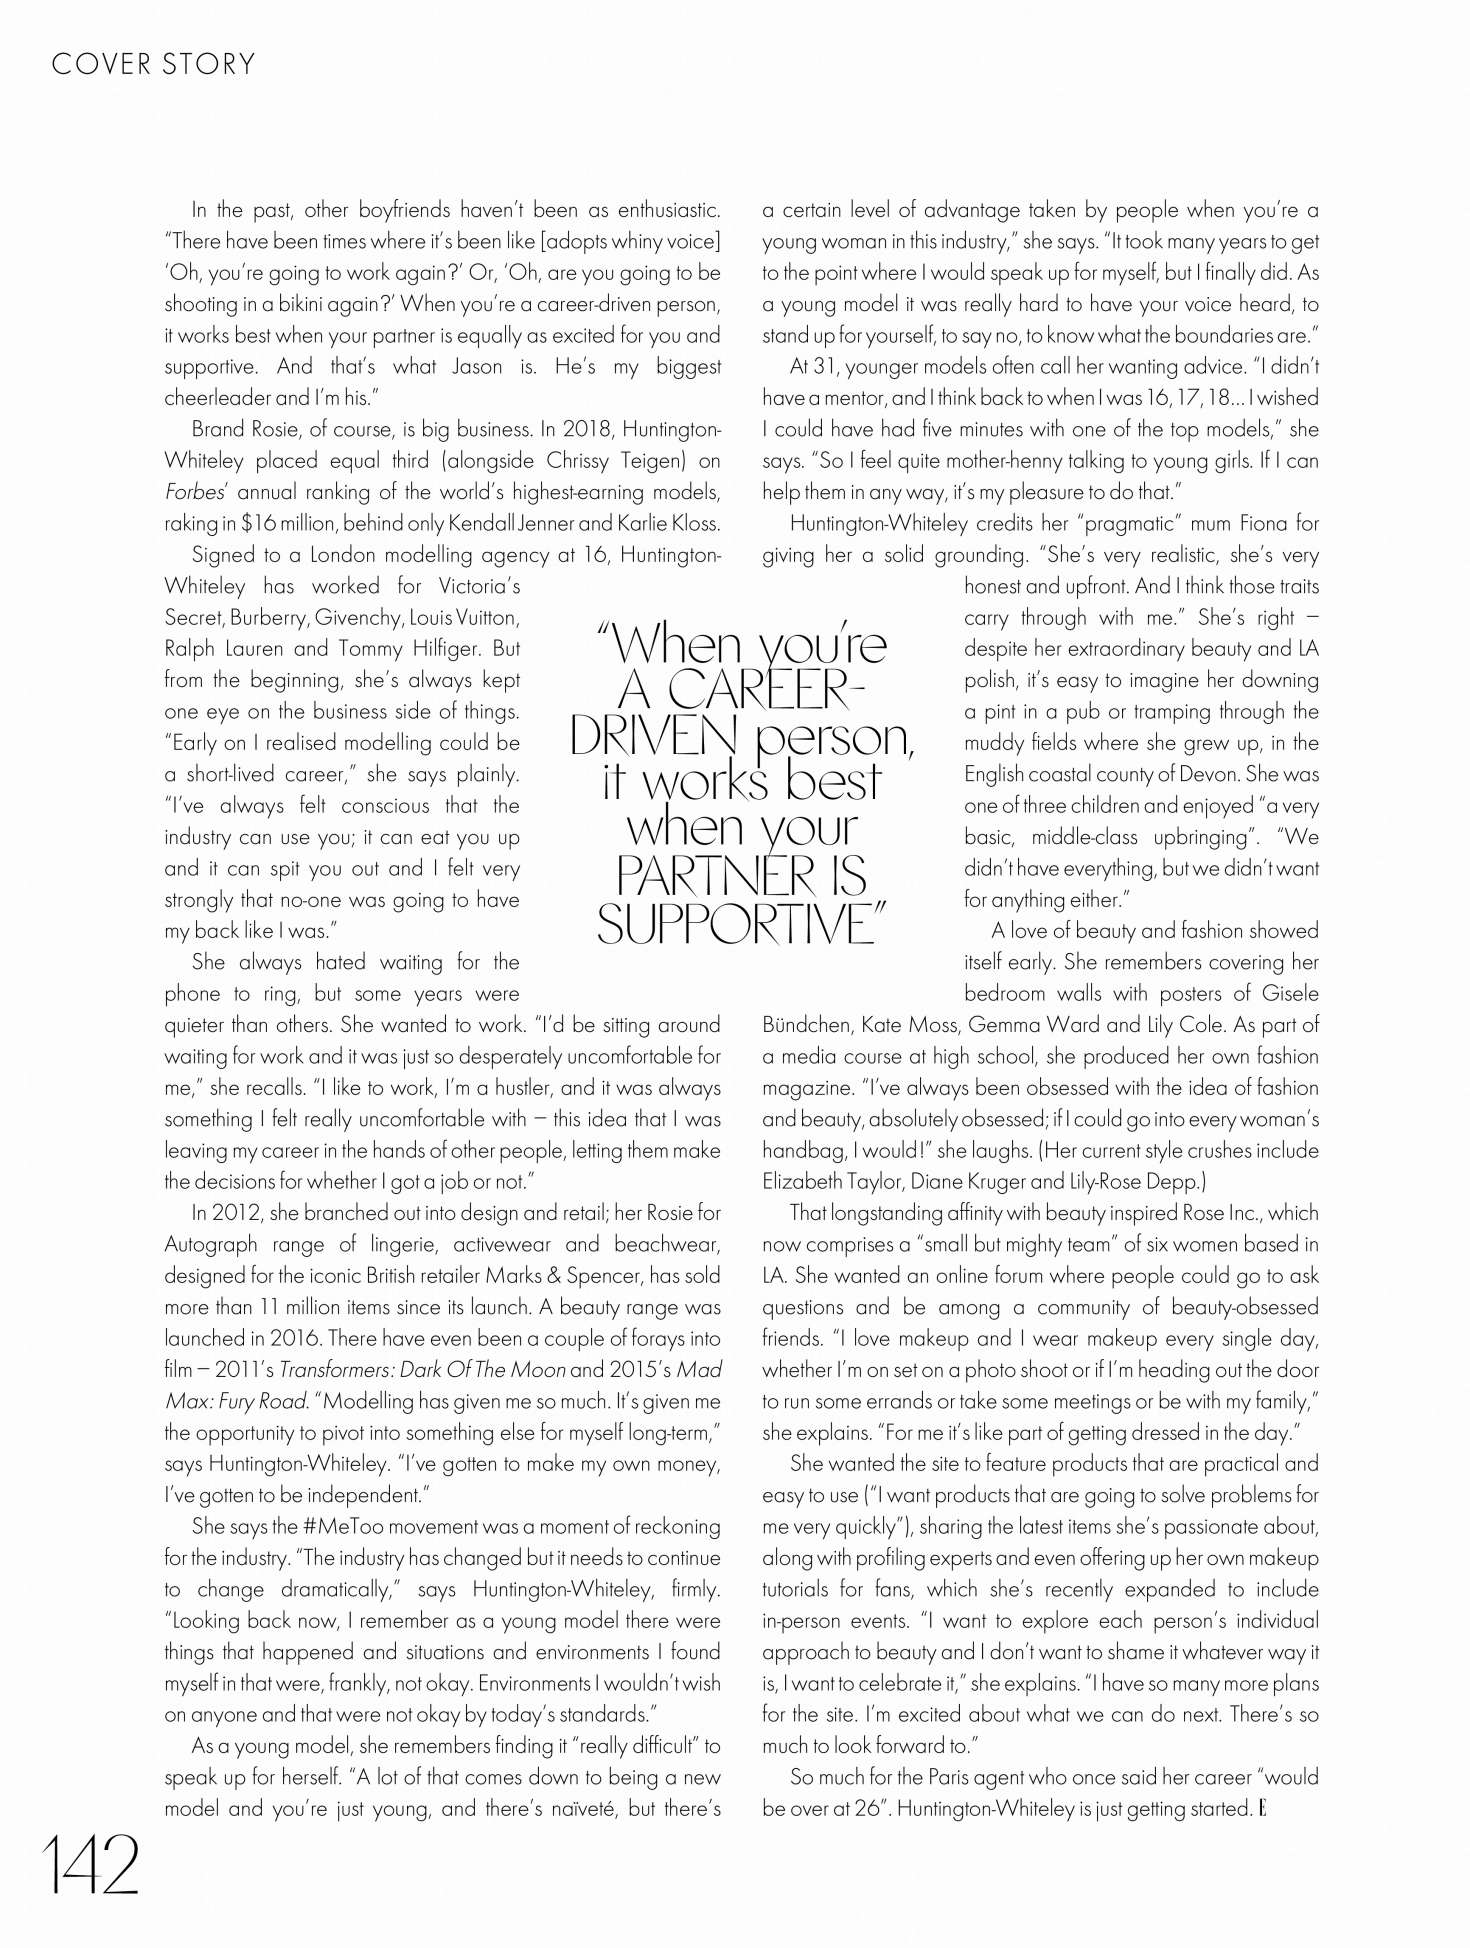 Rosie Huntington Whiteley â€“ Elle Australia Magazine (March 2019)